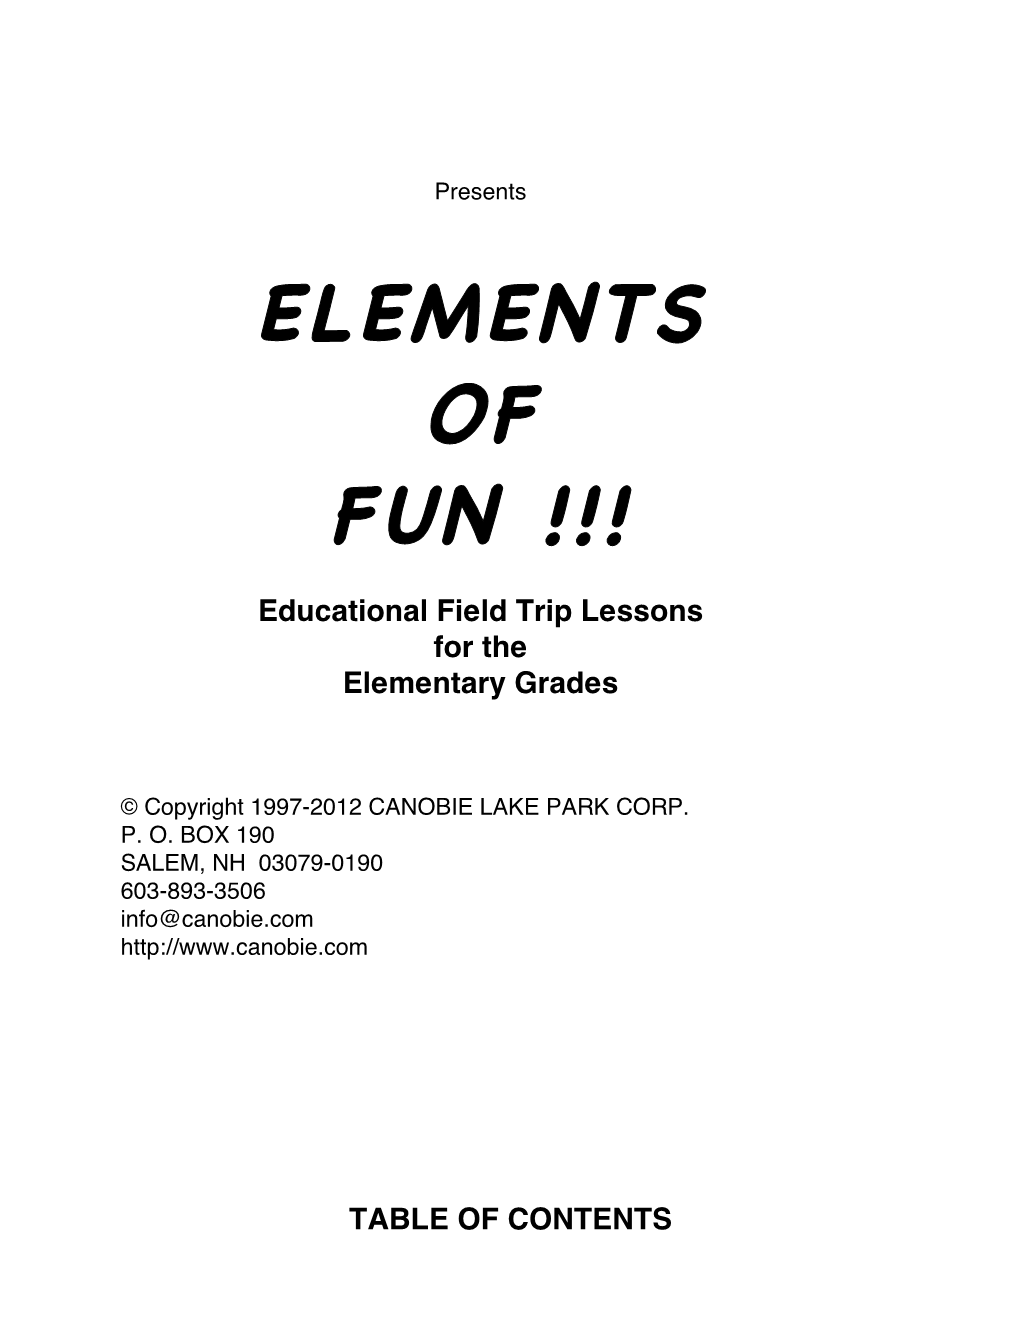 Elements of Fun !!!